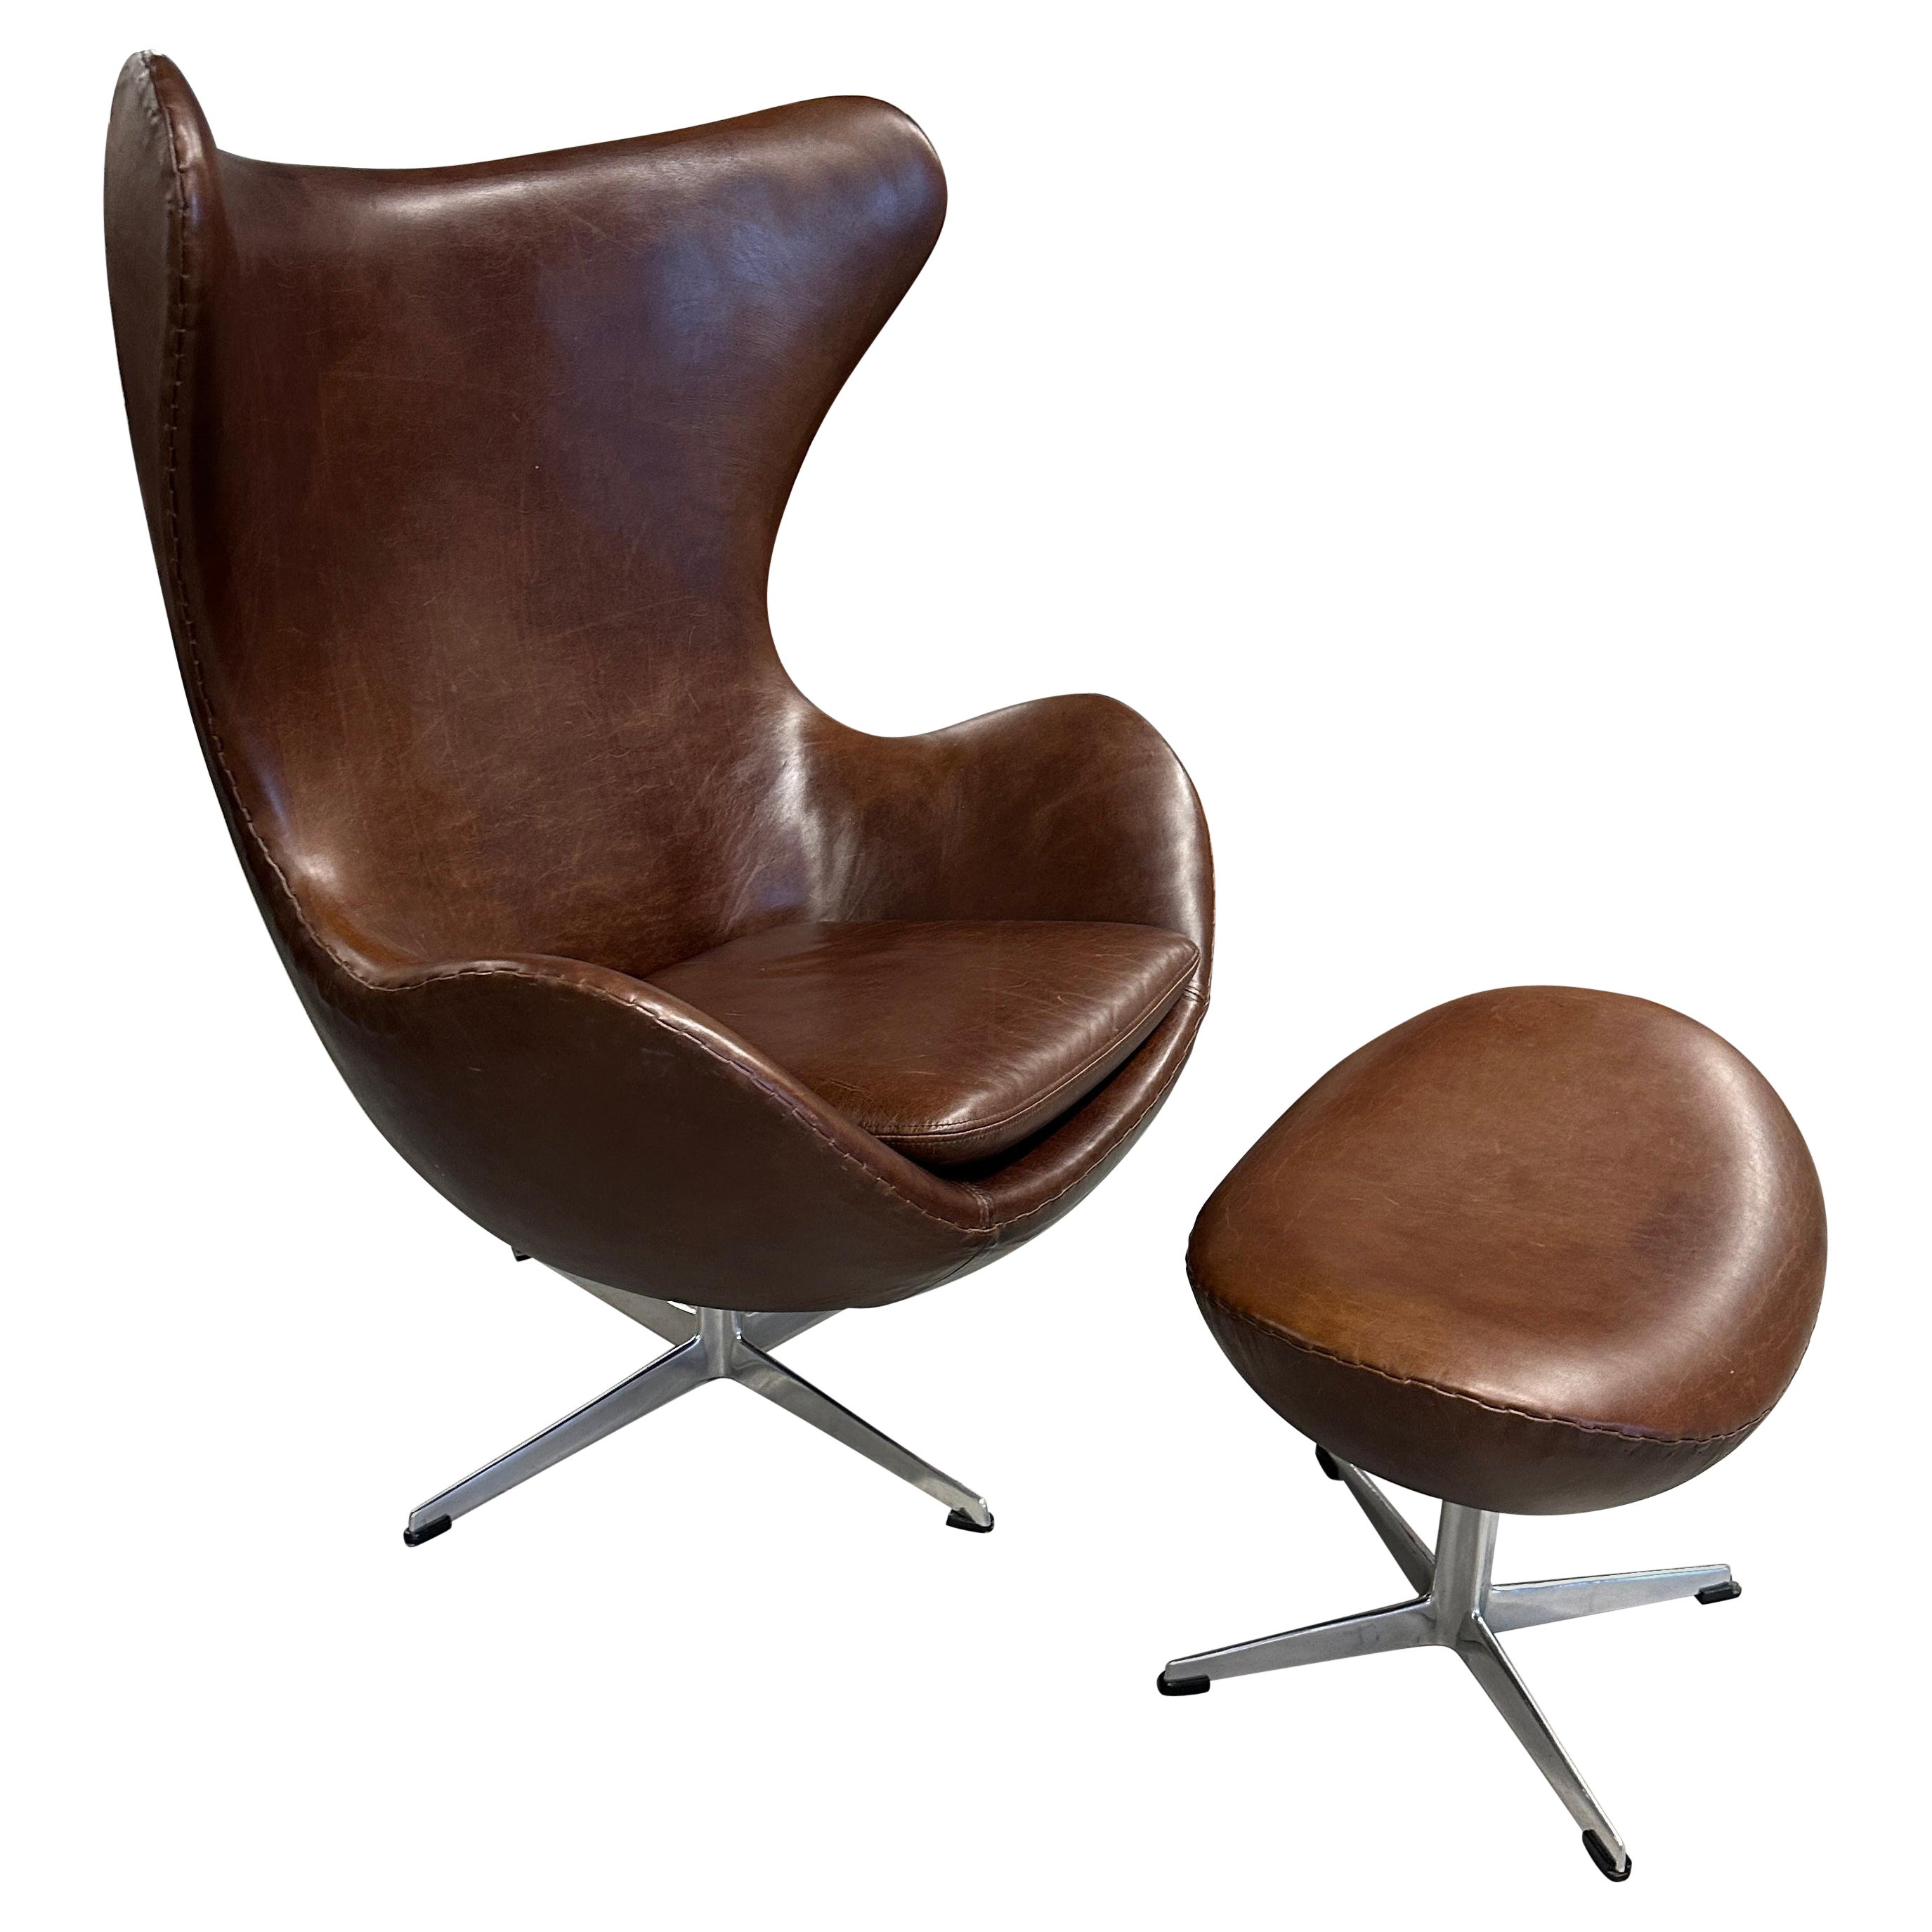 1965 Arne Jacobsen for Fritz Hansen Leather Egg Chair and Ottoman 